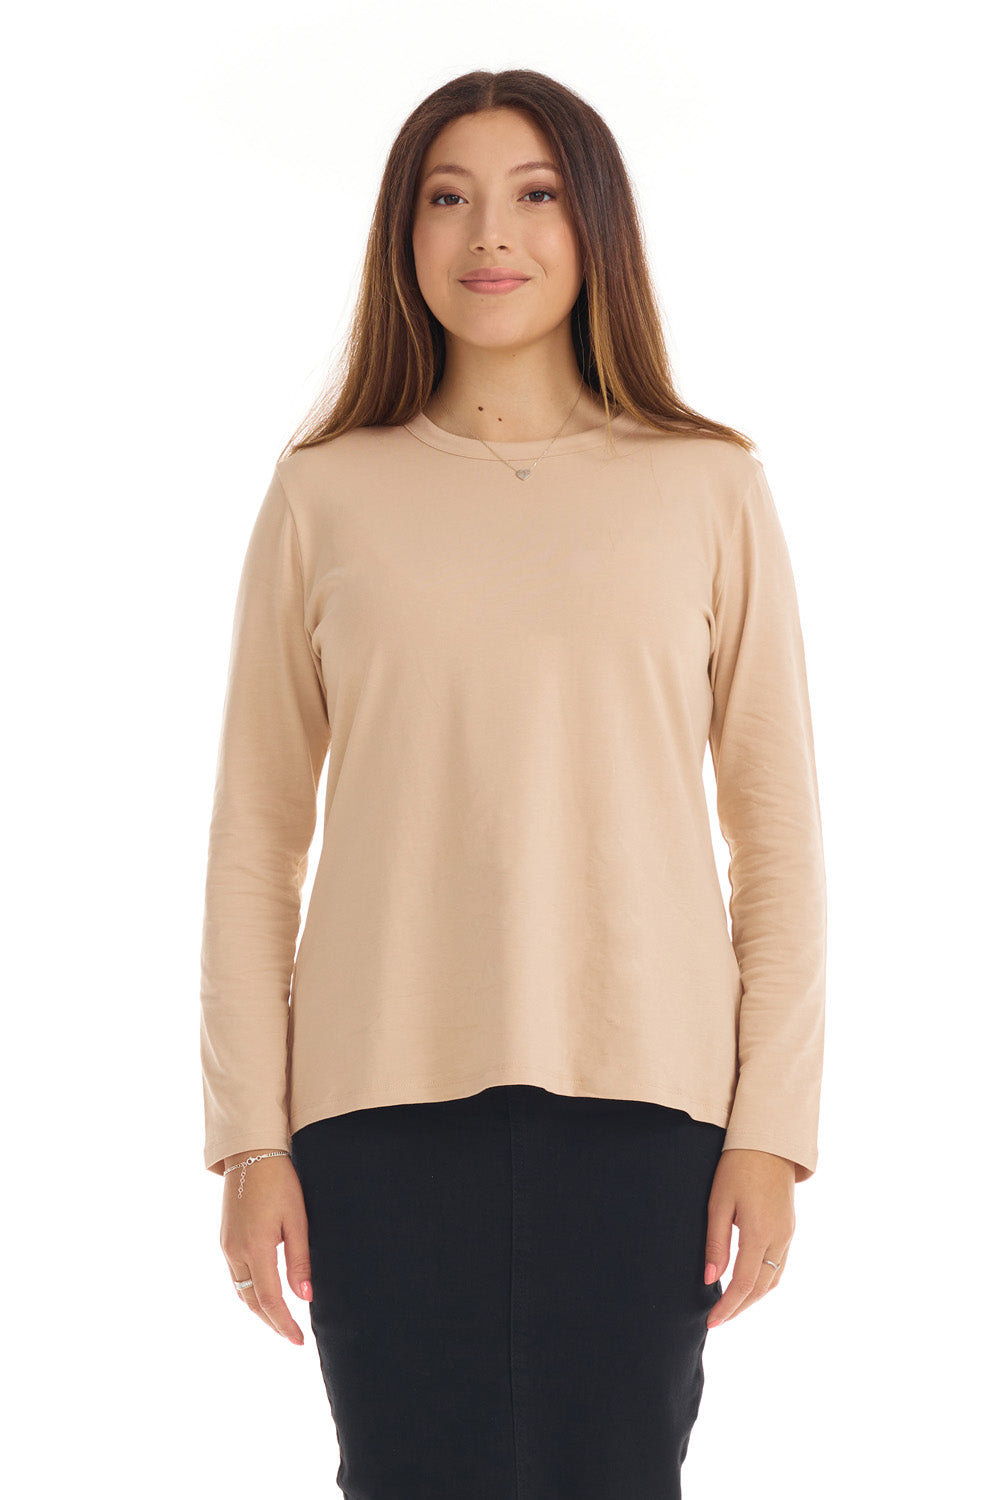 tan color basic loose cotton shirt for women 